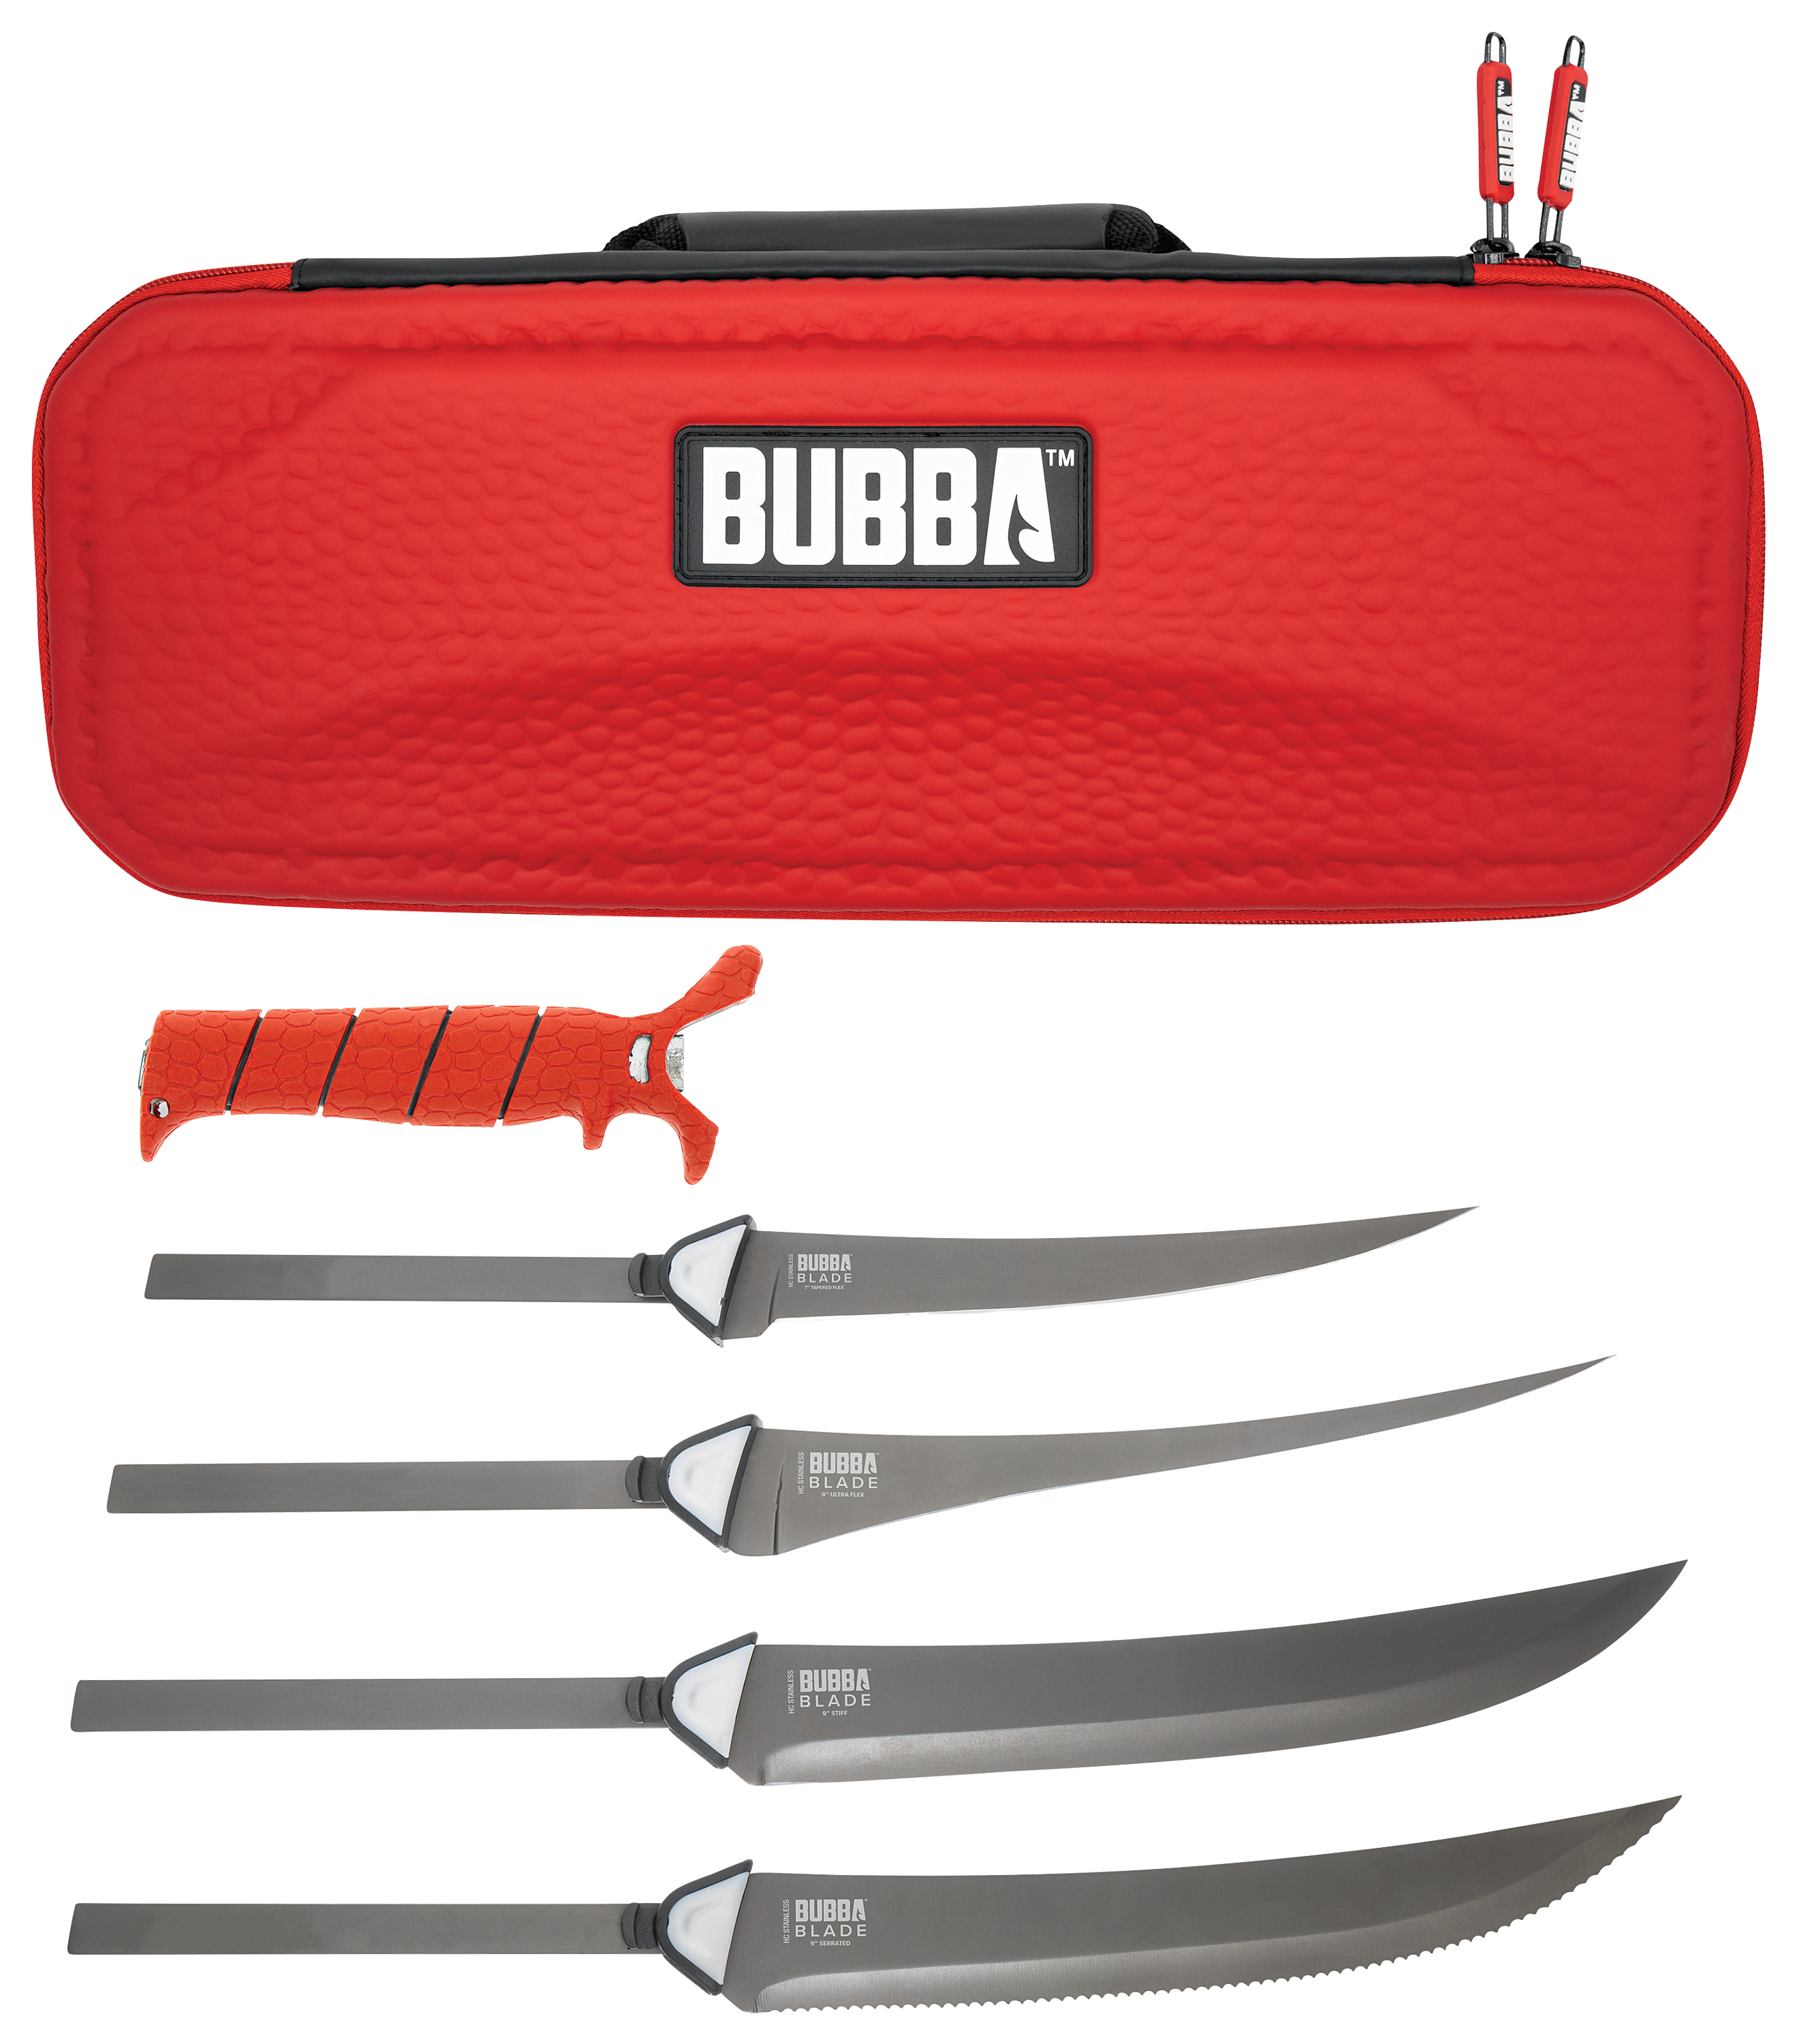 Bubba Blade Freshwater Multi-Flex Interchangeable Set